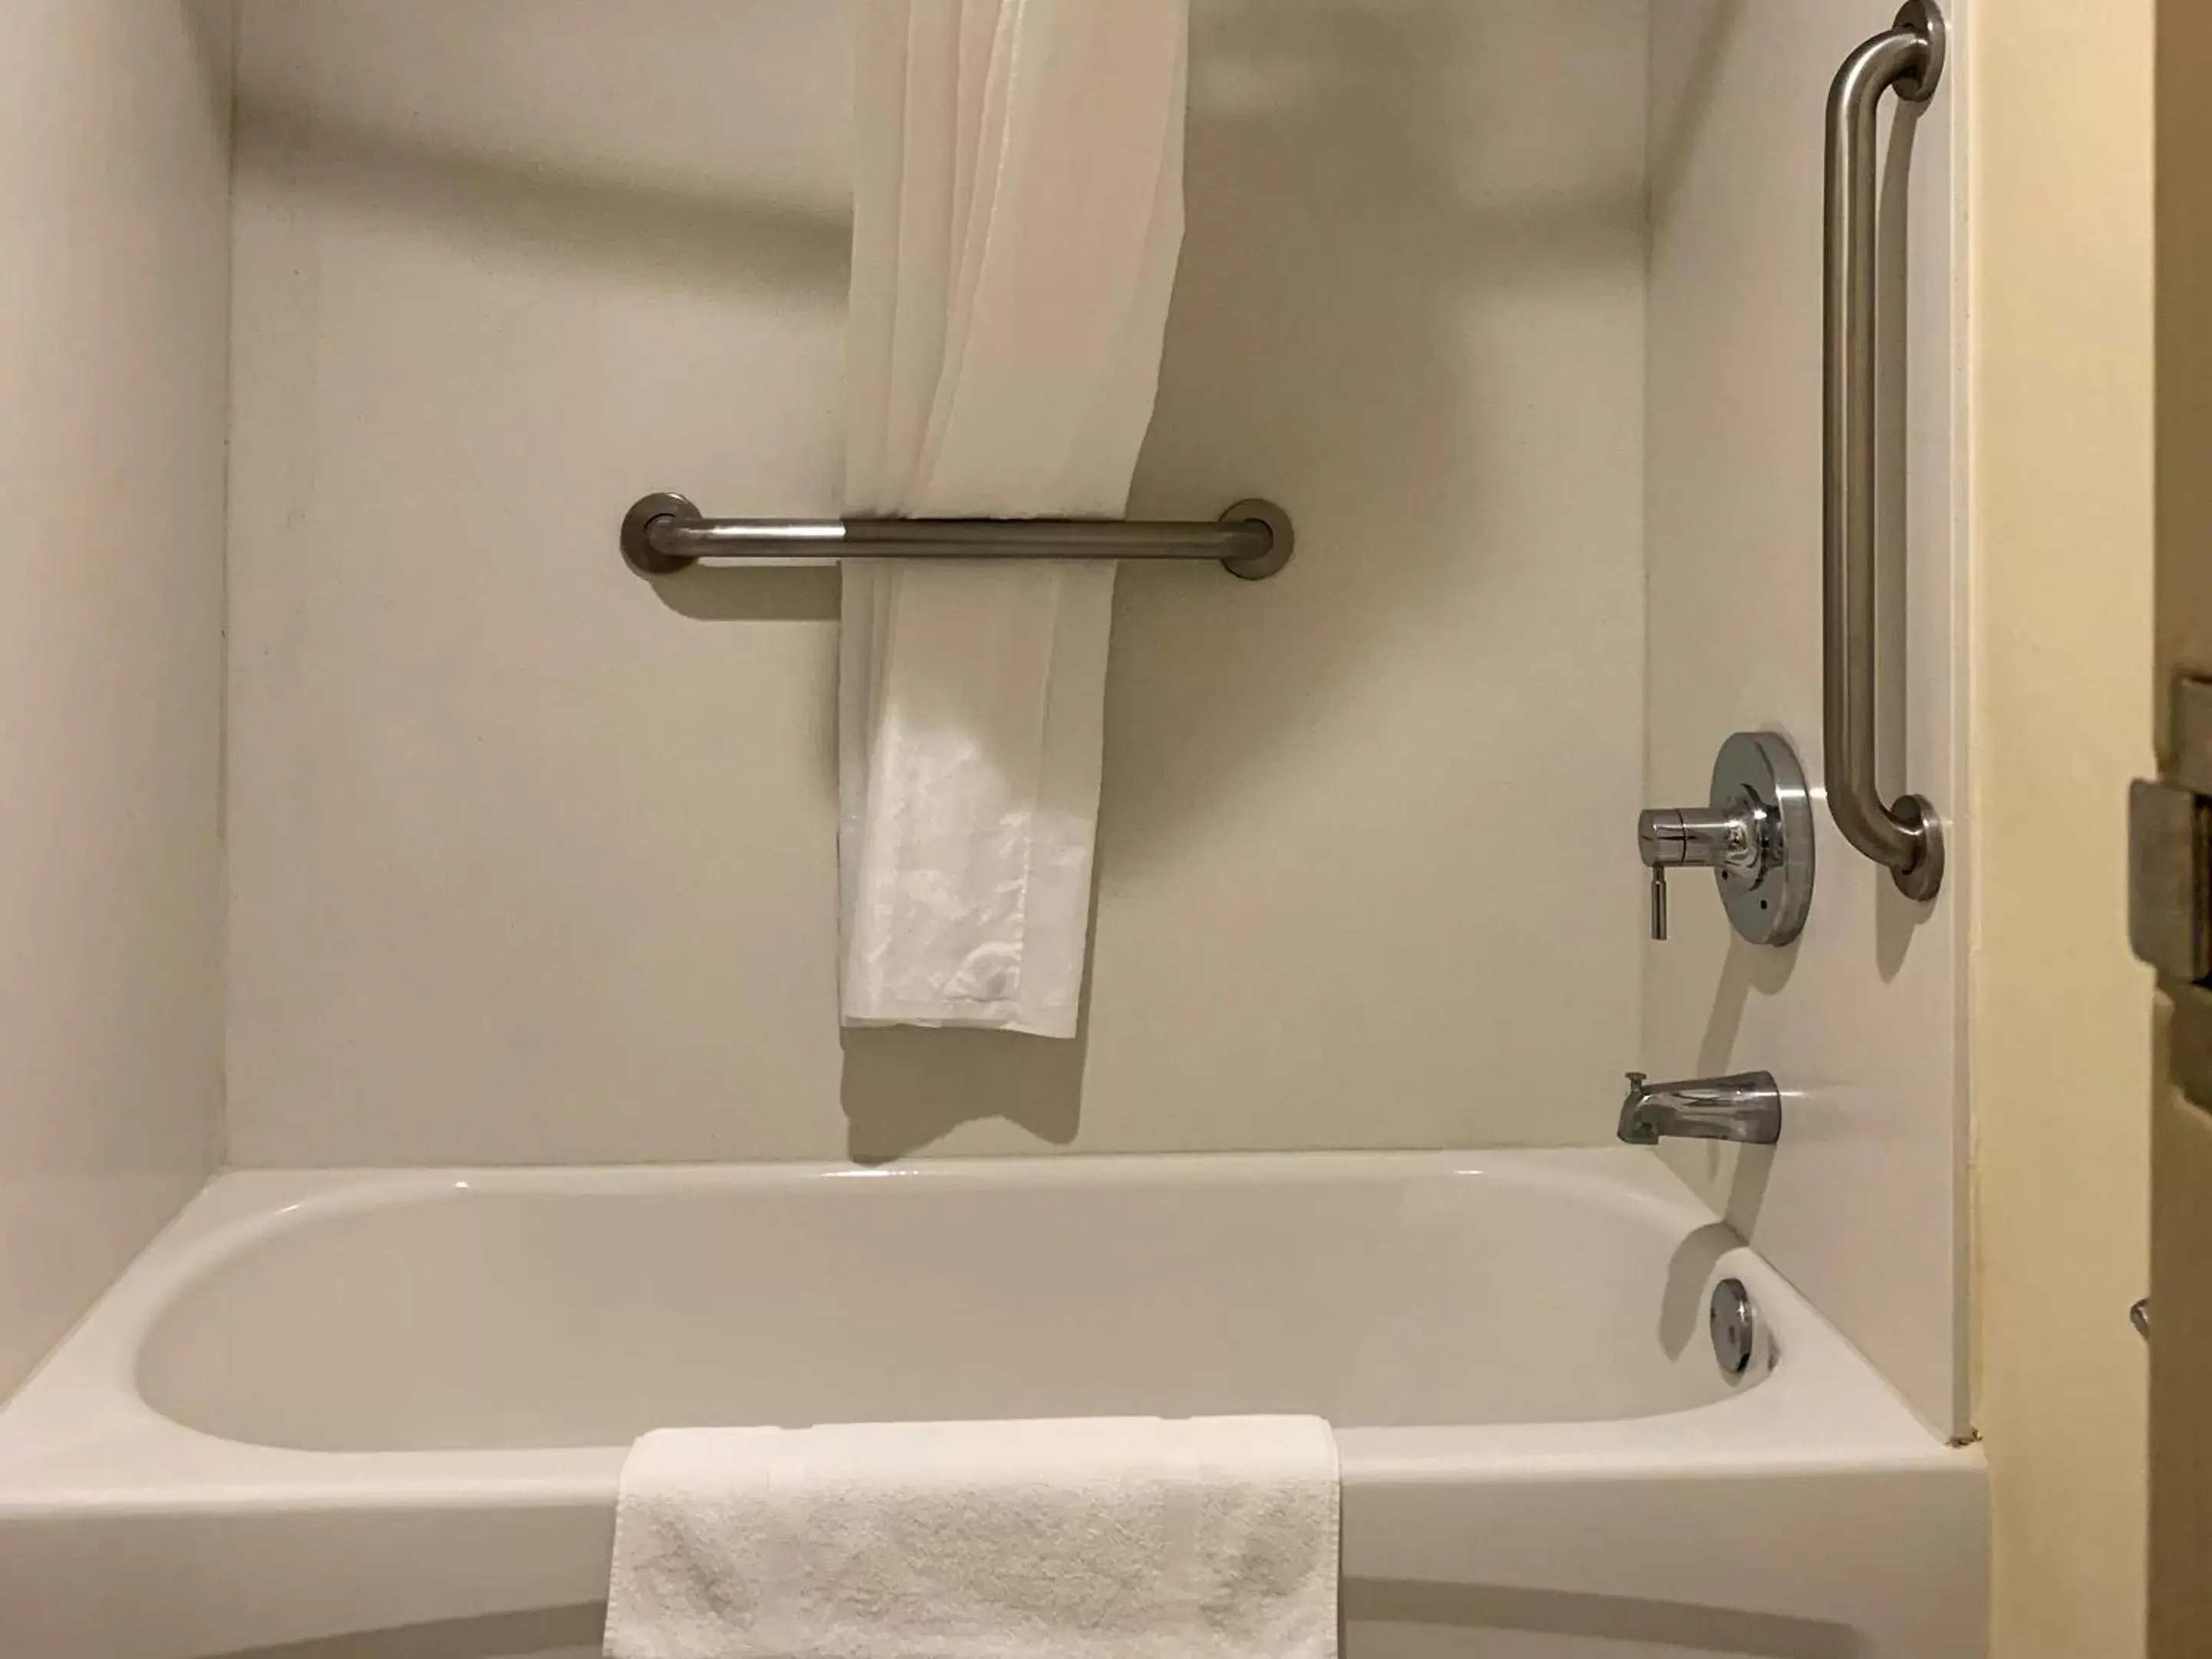 Bathroom in MainStay Suites John Wayne Airport, a Choice Hotel